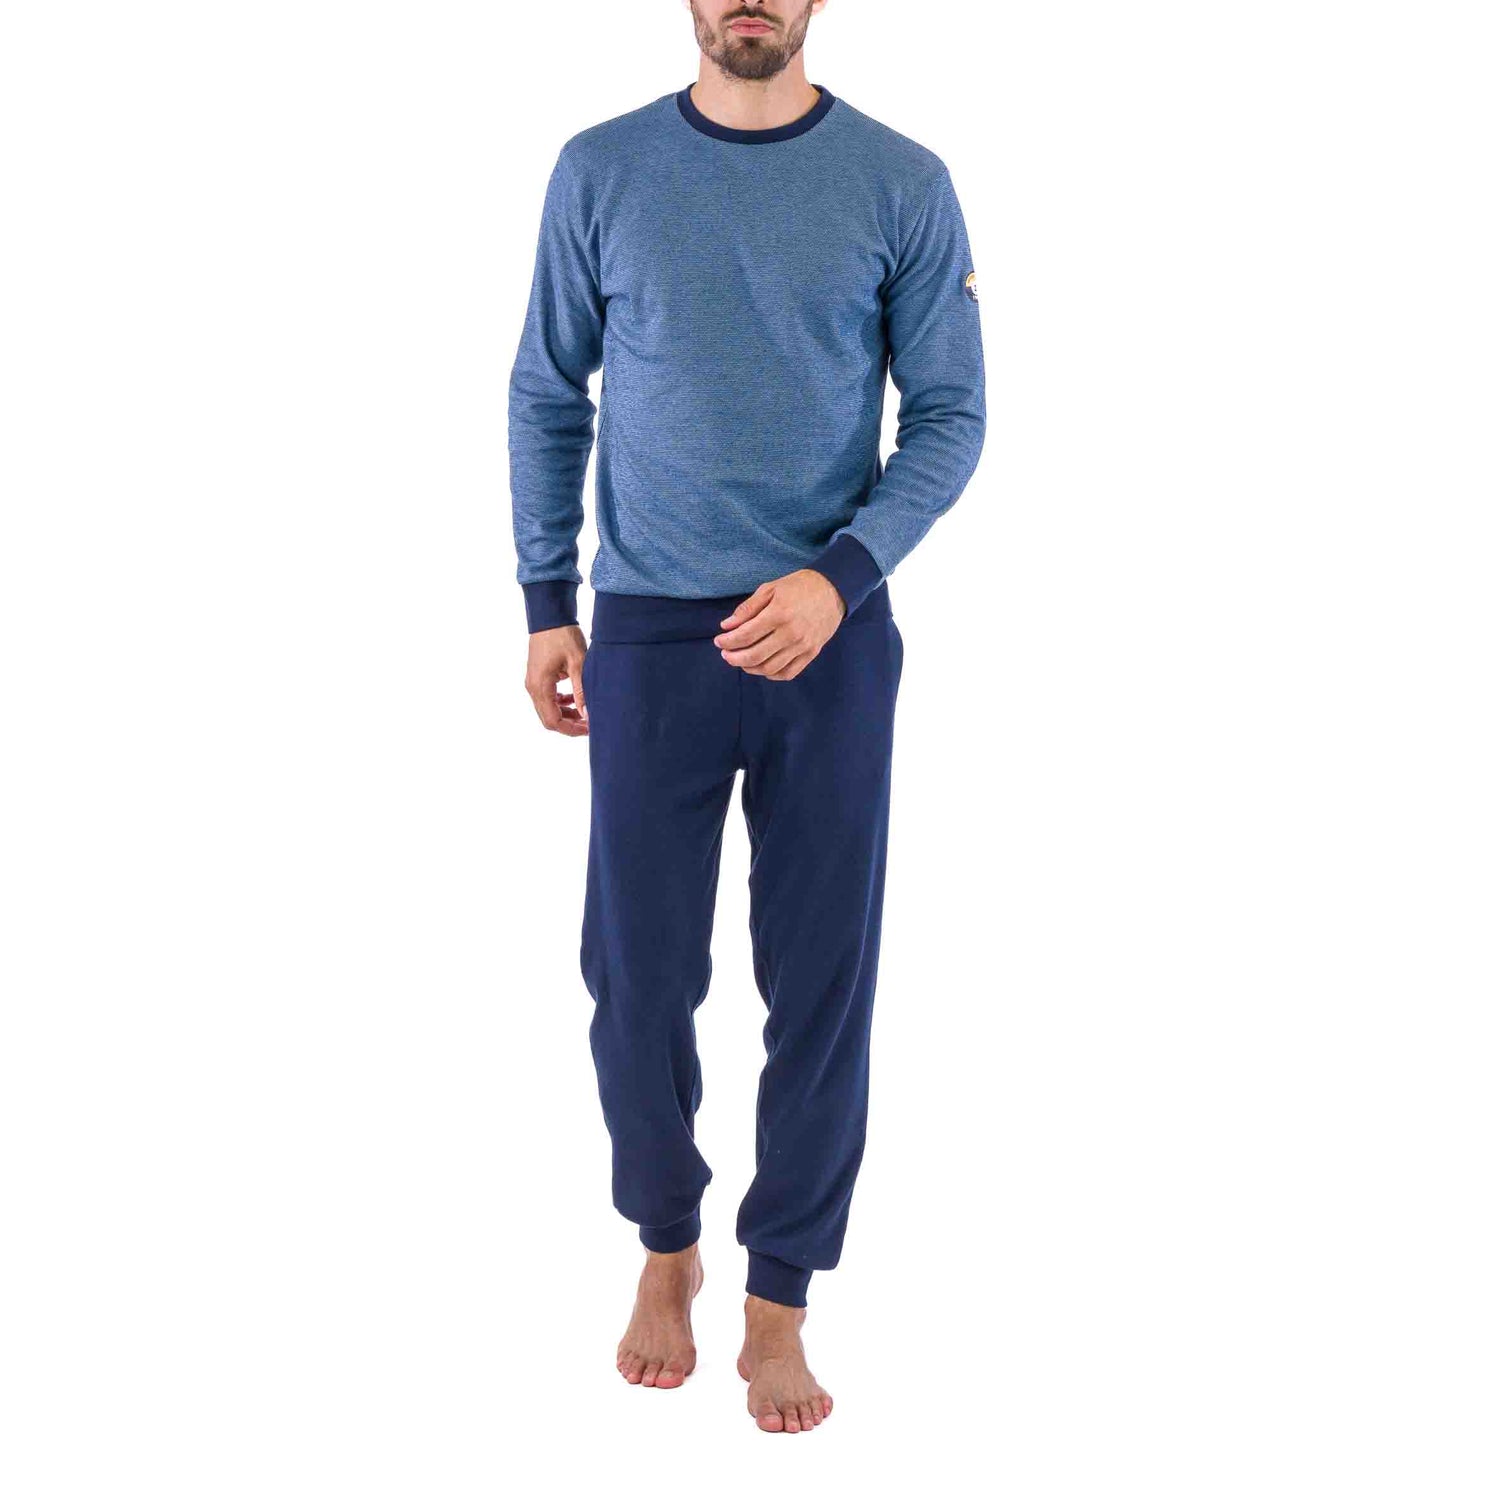 Round Neck Pajamas in Navy Piqué Knit Cotton Jersey